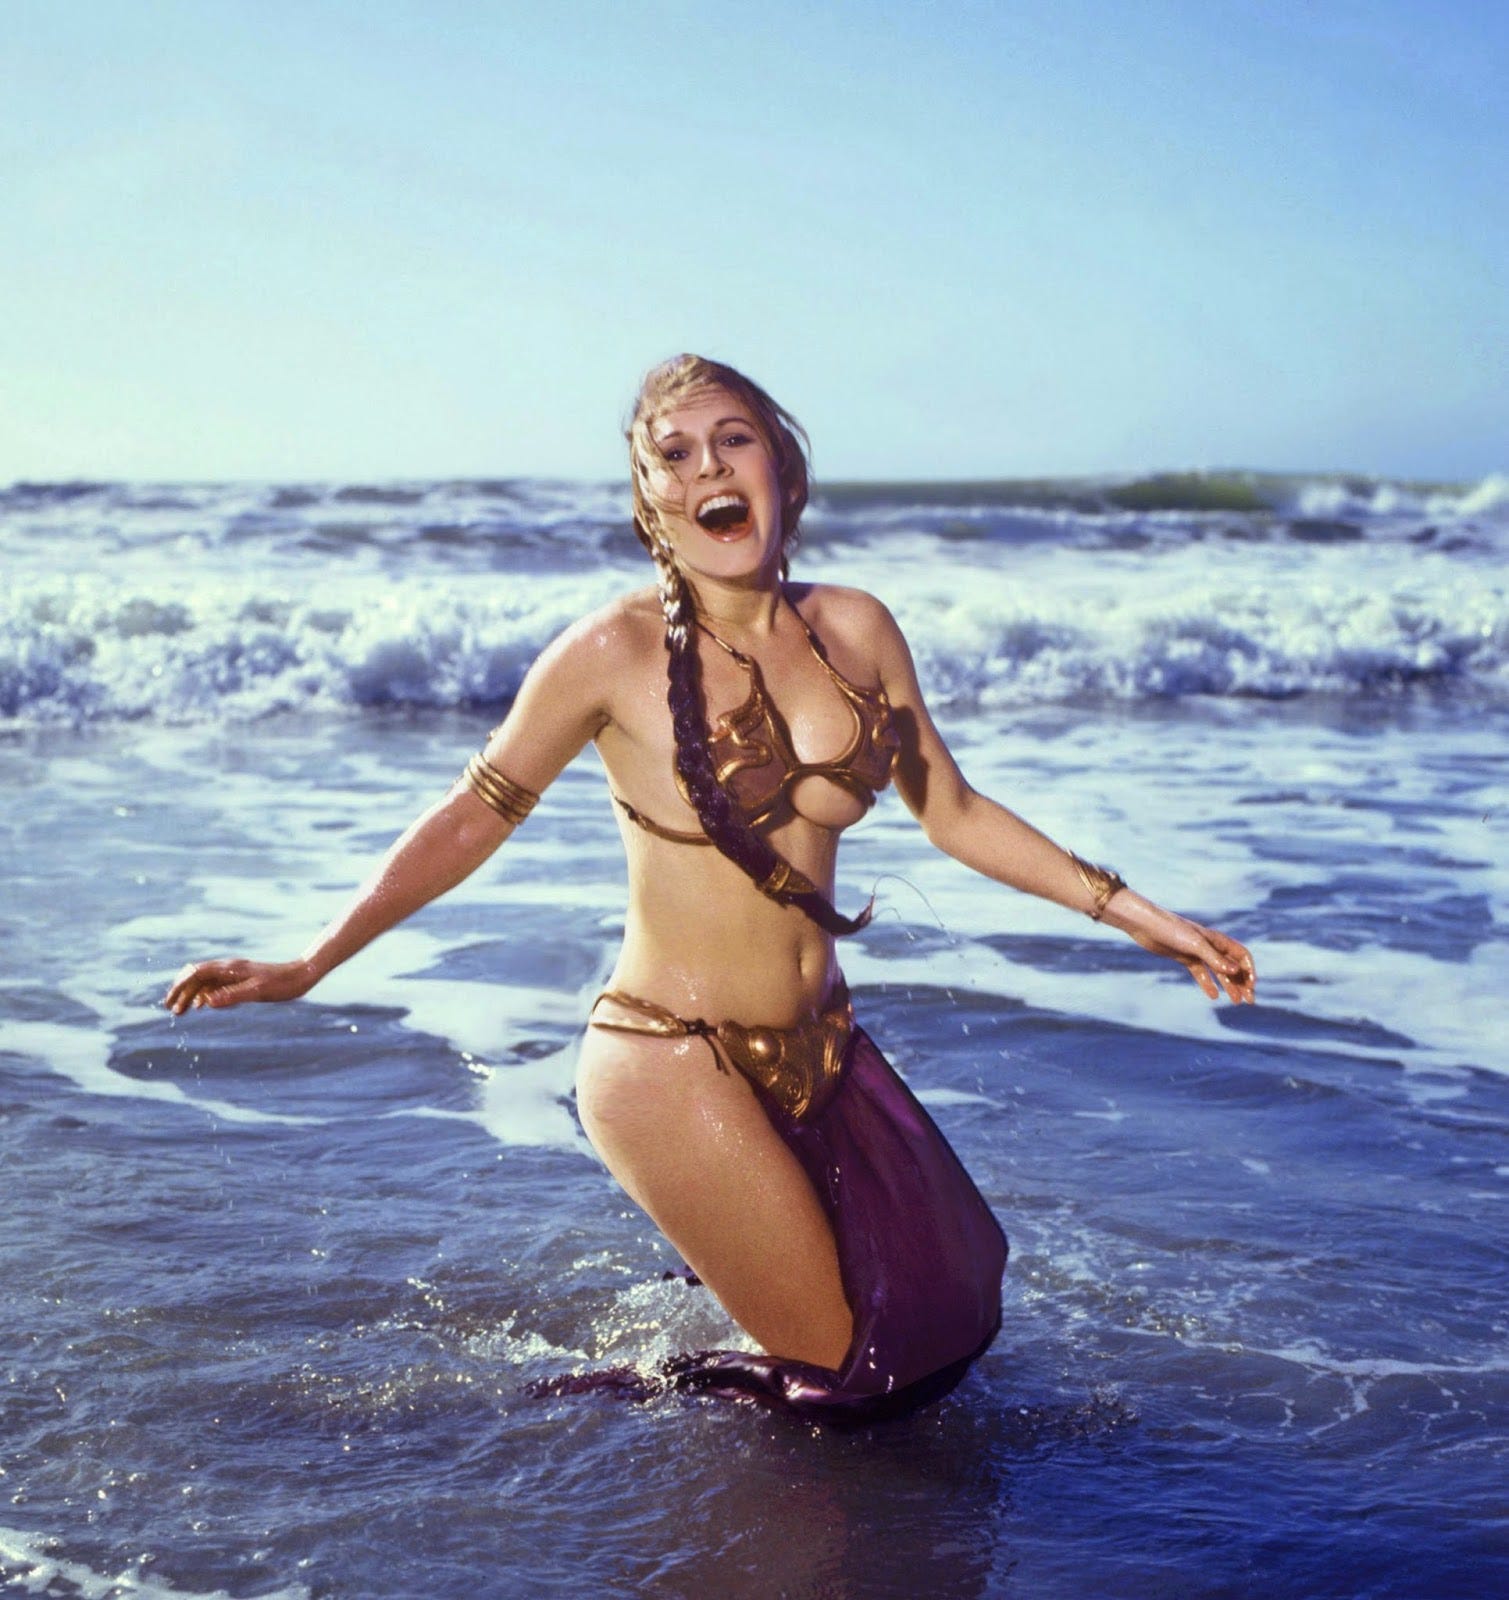 Musings on Princess Leia's Bikini | by Emma Lindsay | Medium